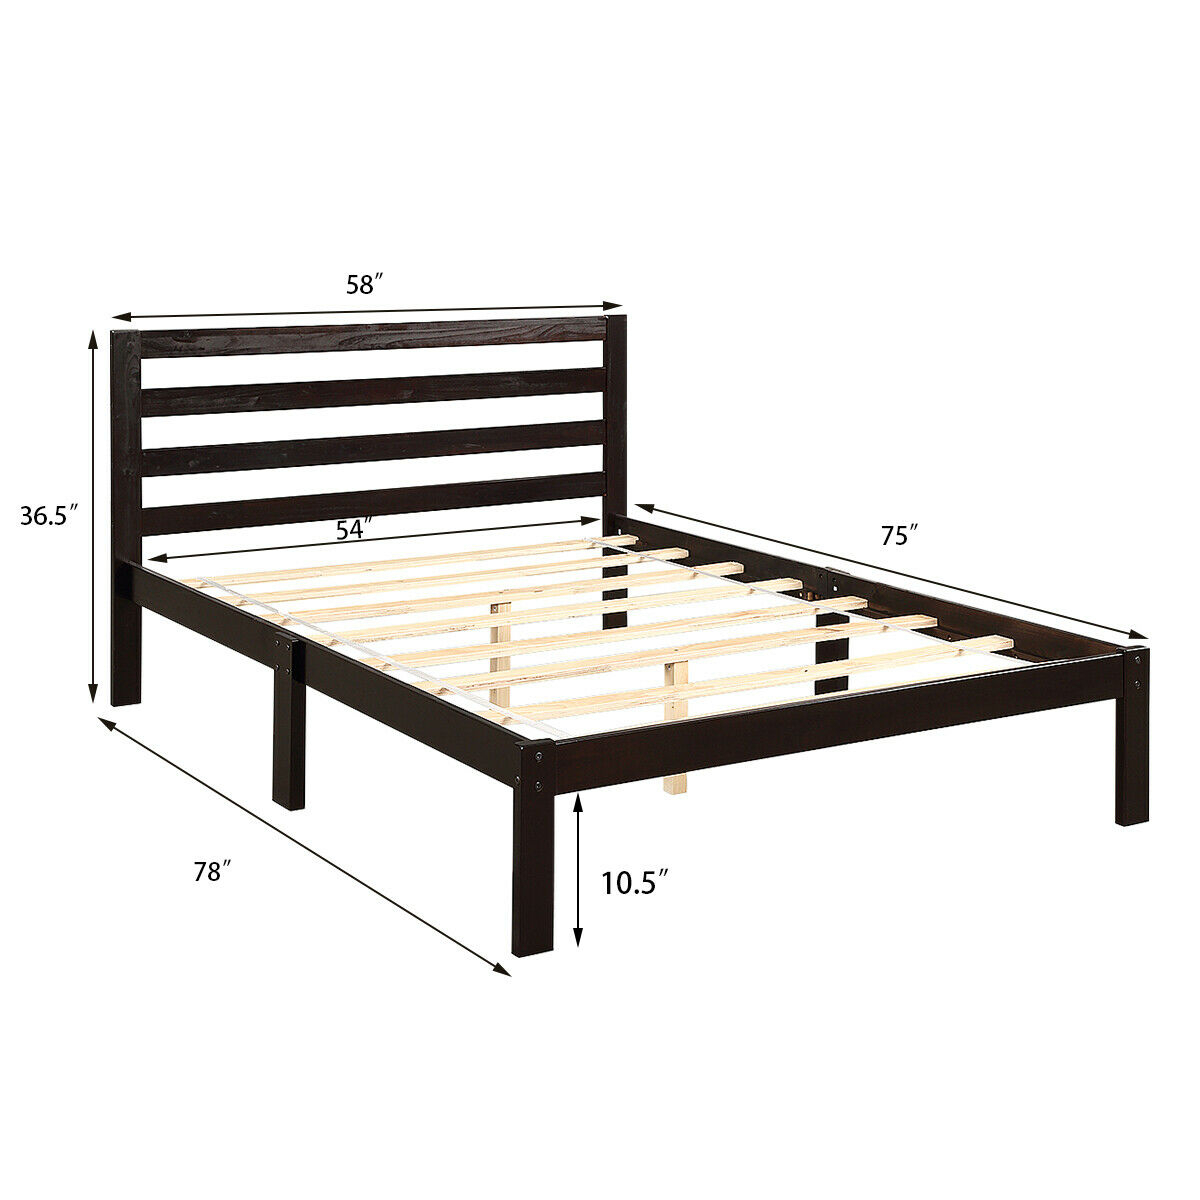 Gymax Solid Wood Platform Bed W, Wooden Platform Bed Frame With Headboard